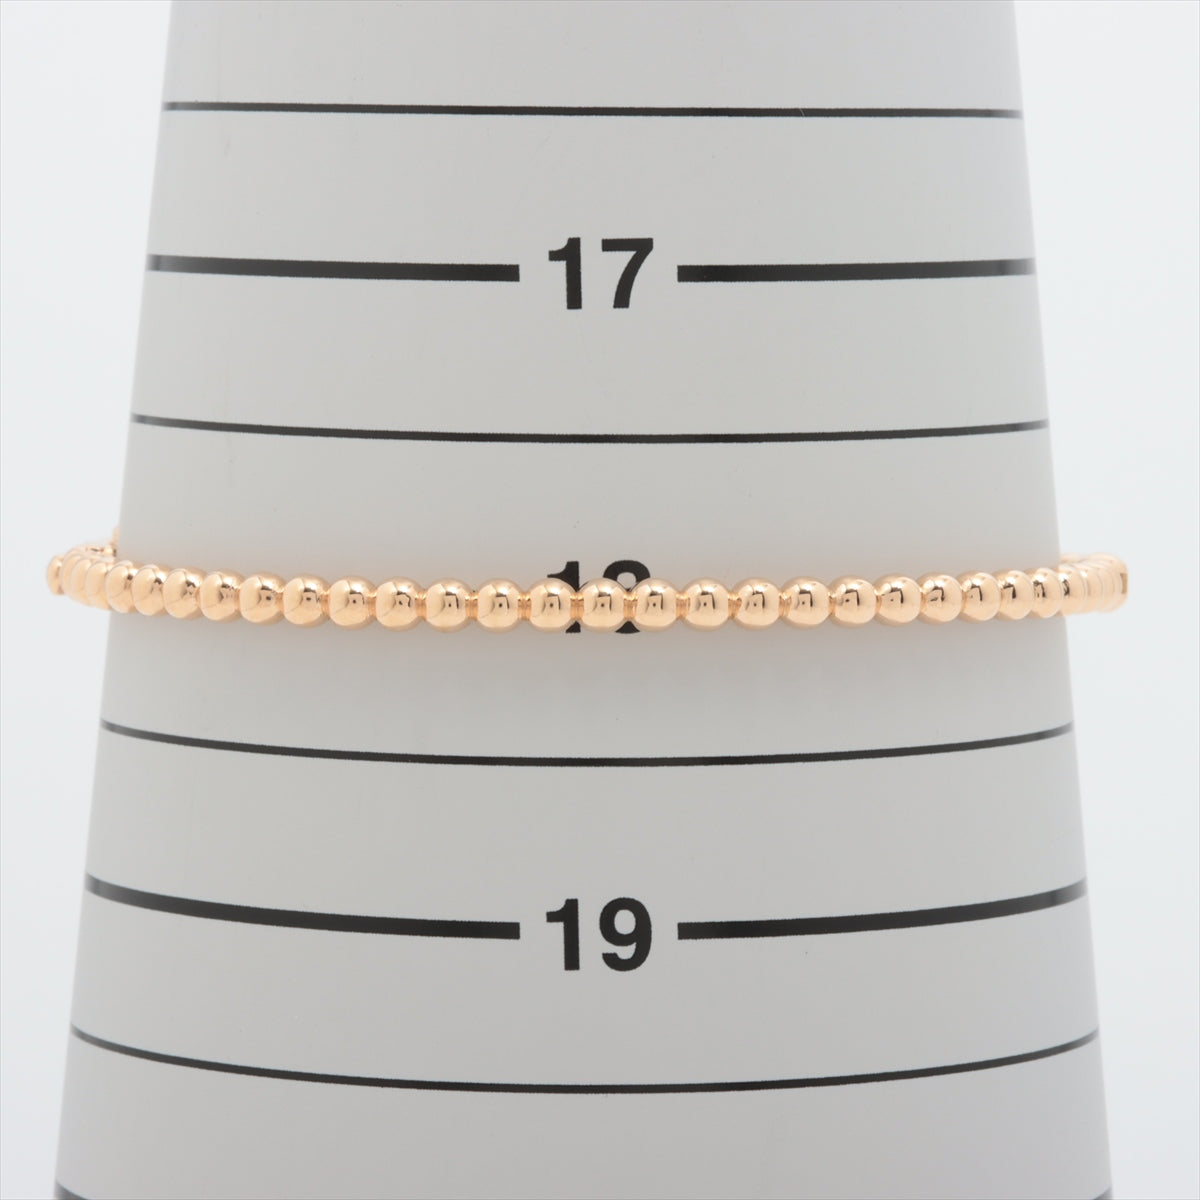 Van Cleef & Arpels Perle Golden Pearl Bracelet 750 (PG) 21.6g L VCARO95800